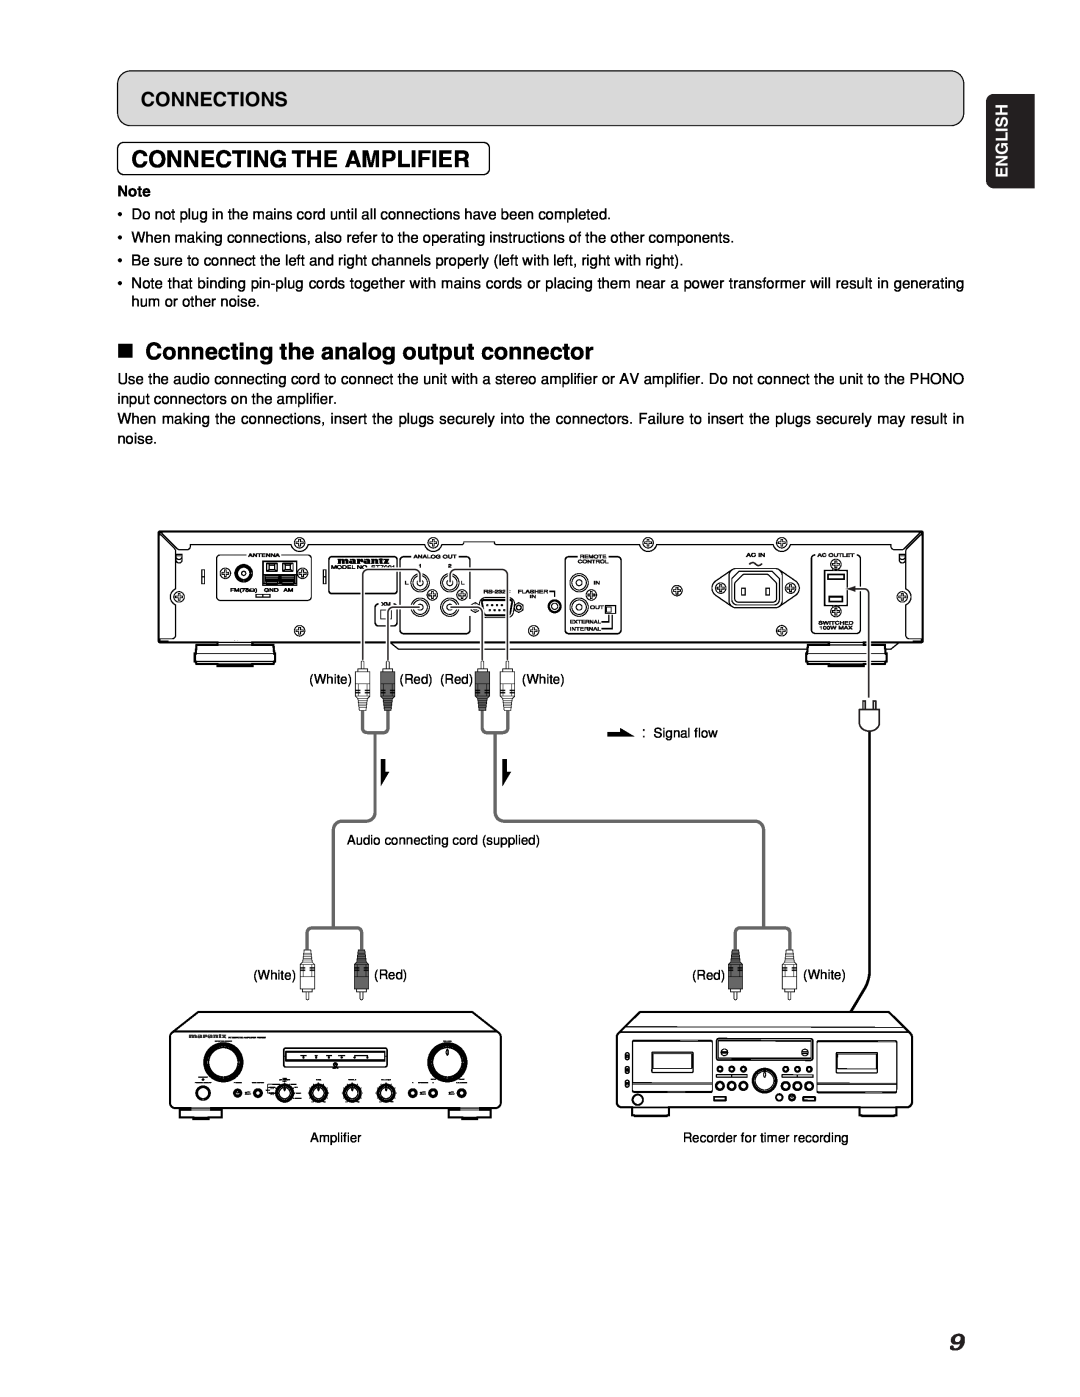 Marantz ST7001 manual Connecting The Amplifier, 7Connecting the analog output connector, Connections, English 